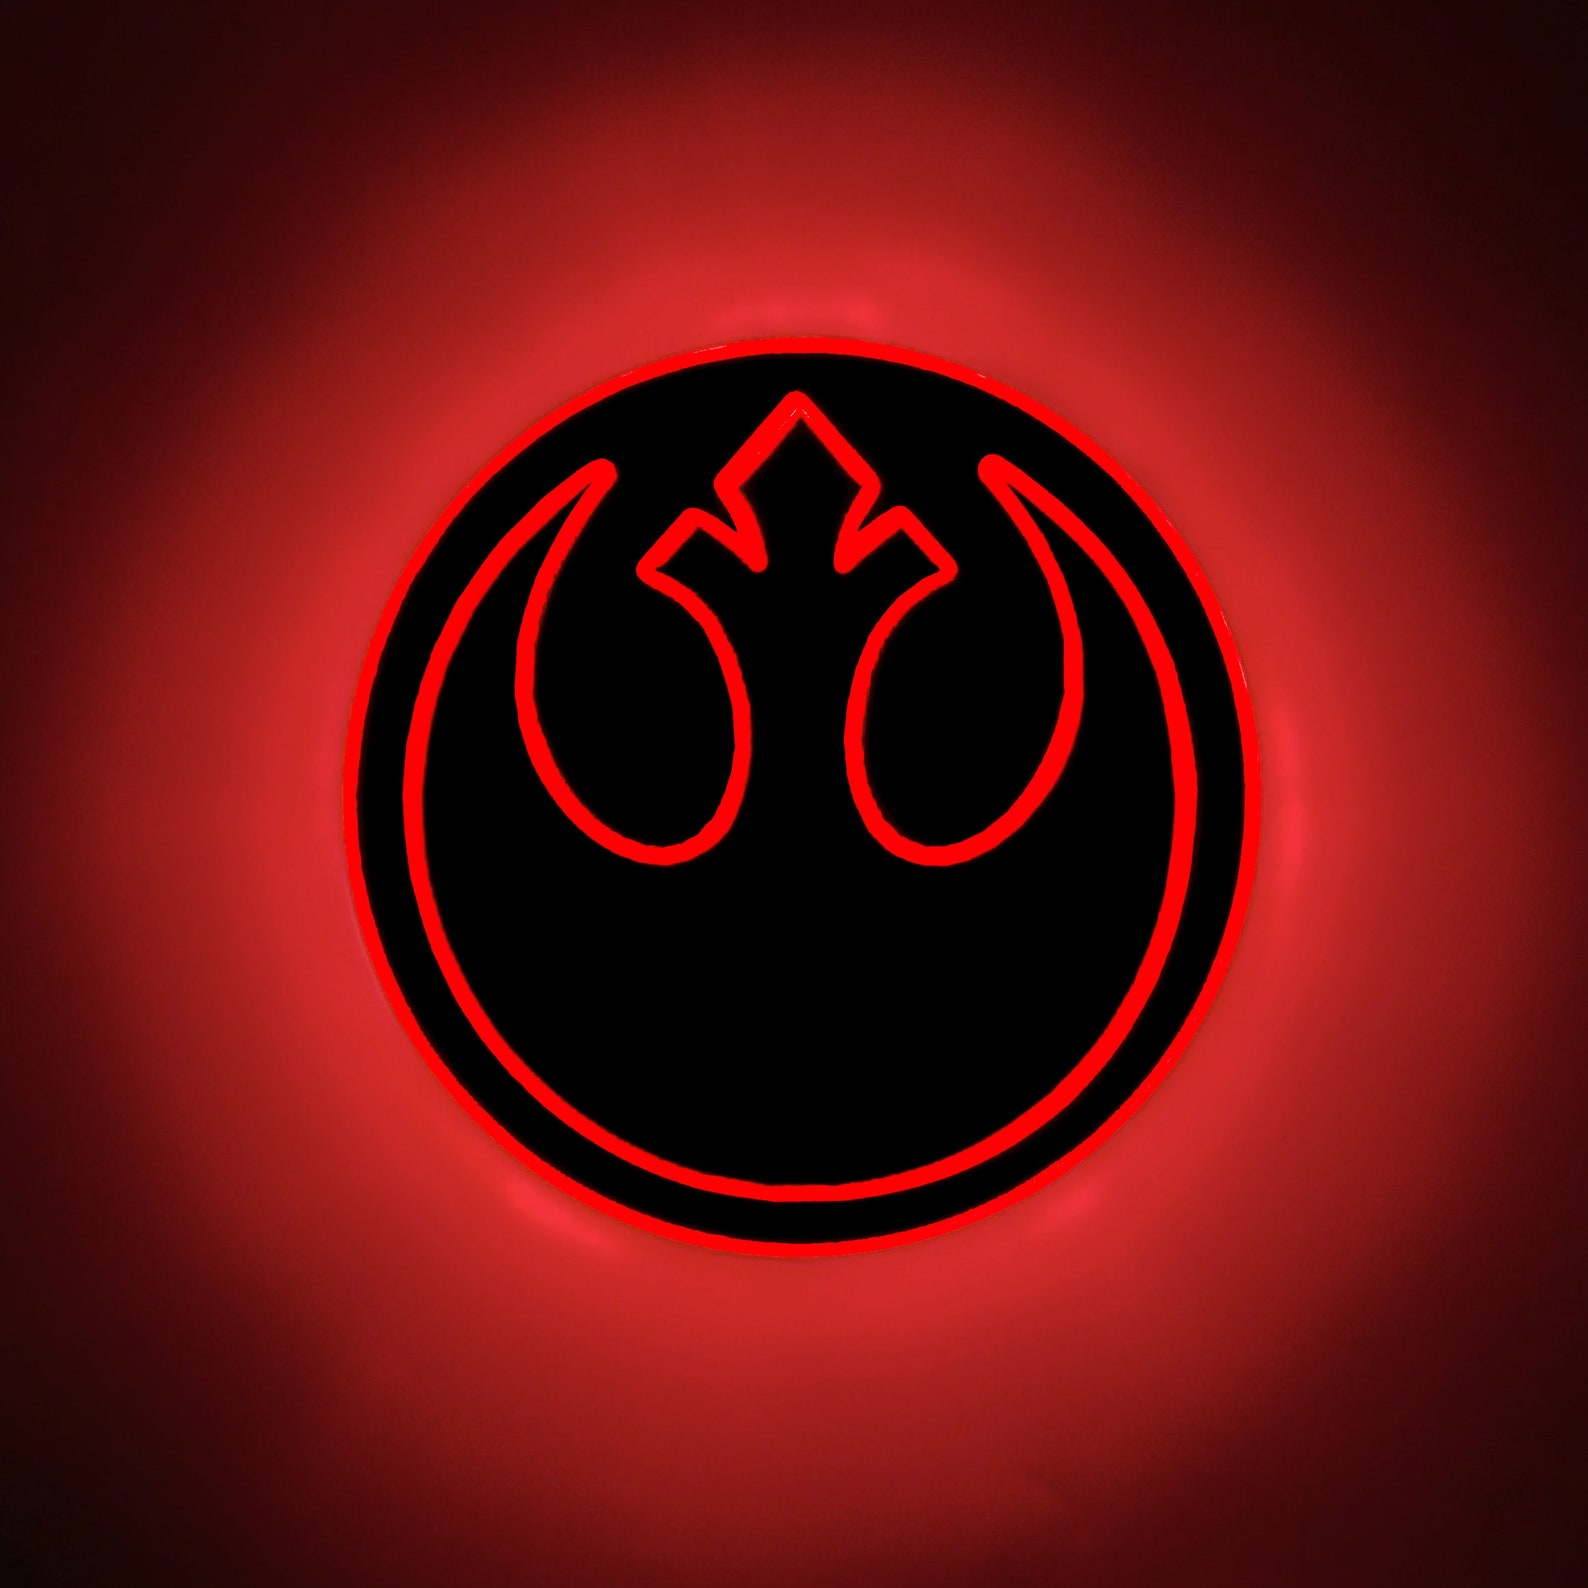 SW Rebel Alliance Symbol Neon Light Wall Decor Sign 2